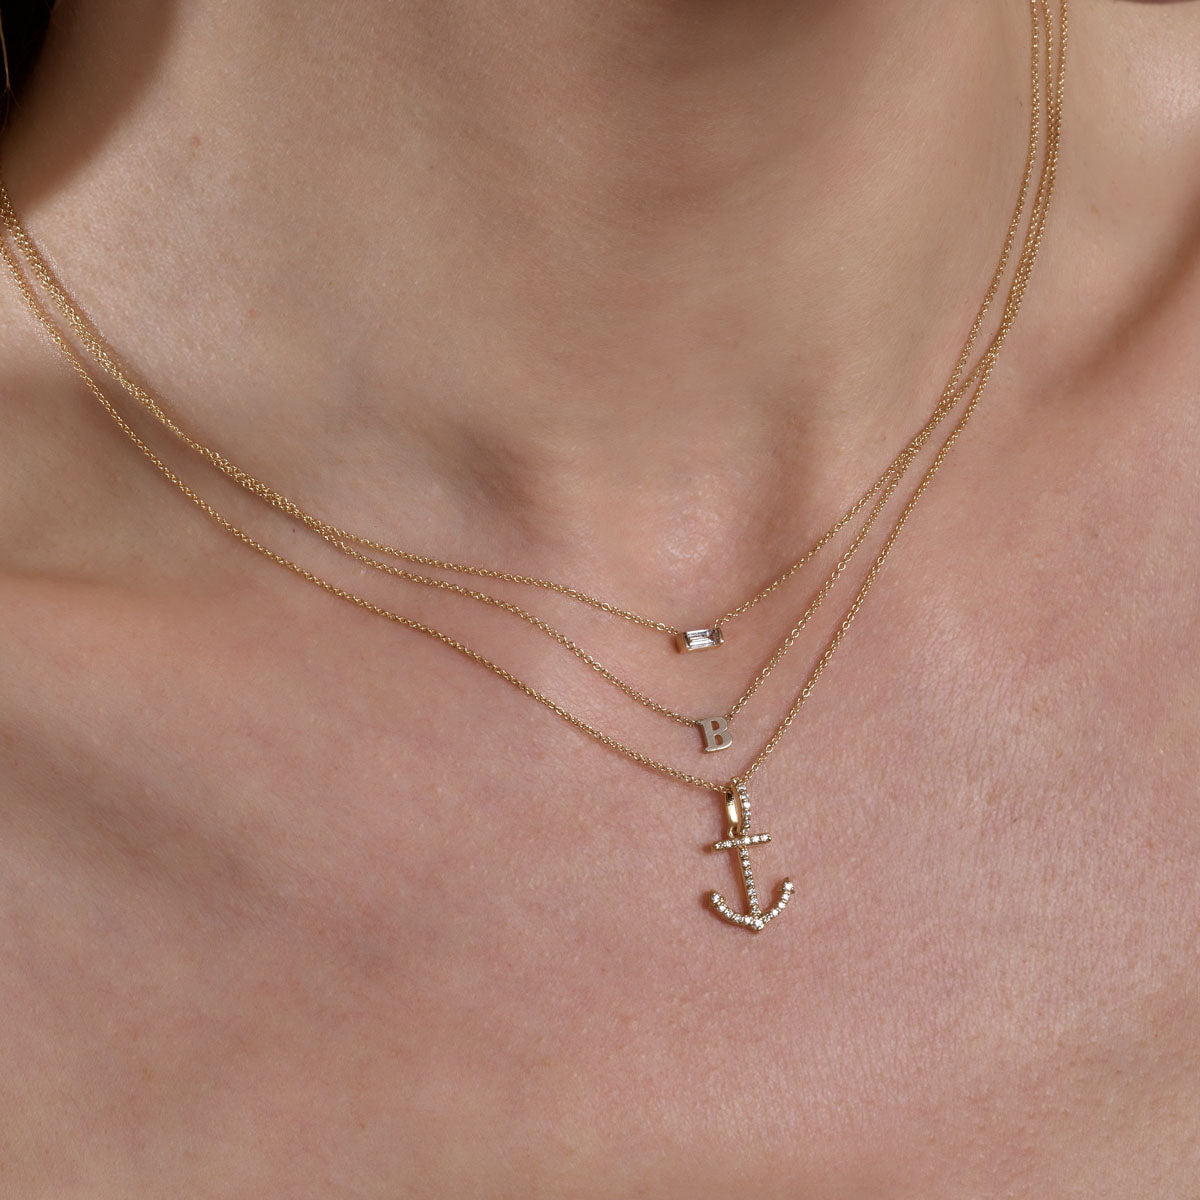 gold diamond rectangle necklace and gold 1 letter initial necklace and gold diamond anchor necklace on neck_8e737845 50aa 4eba b279 8f9fd8f2384a